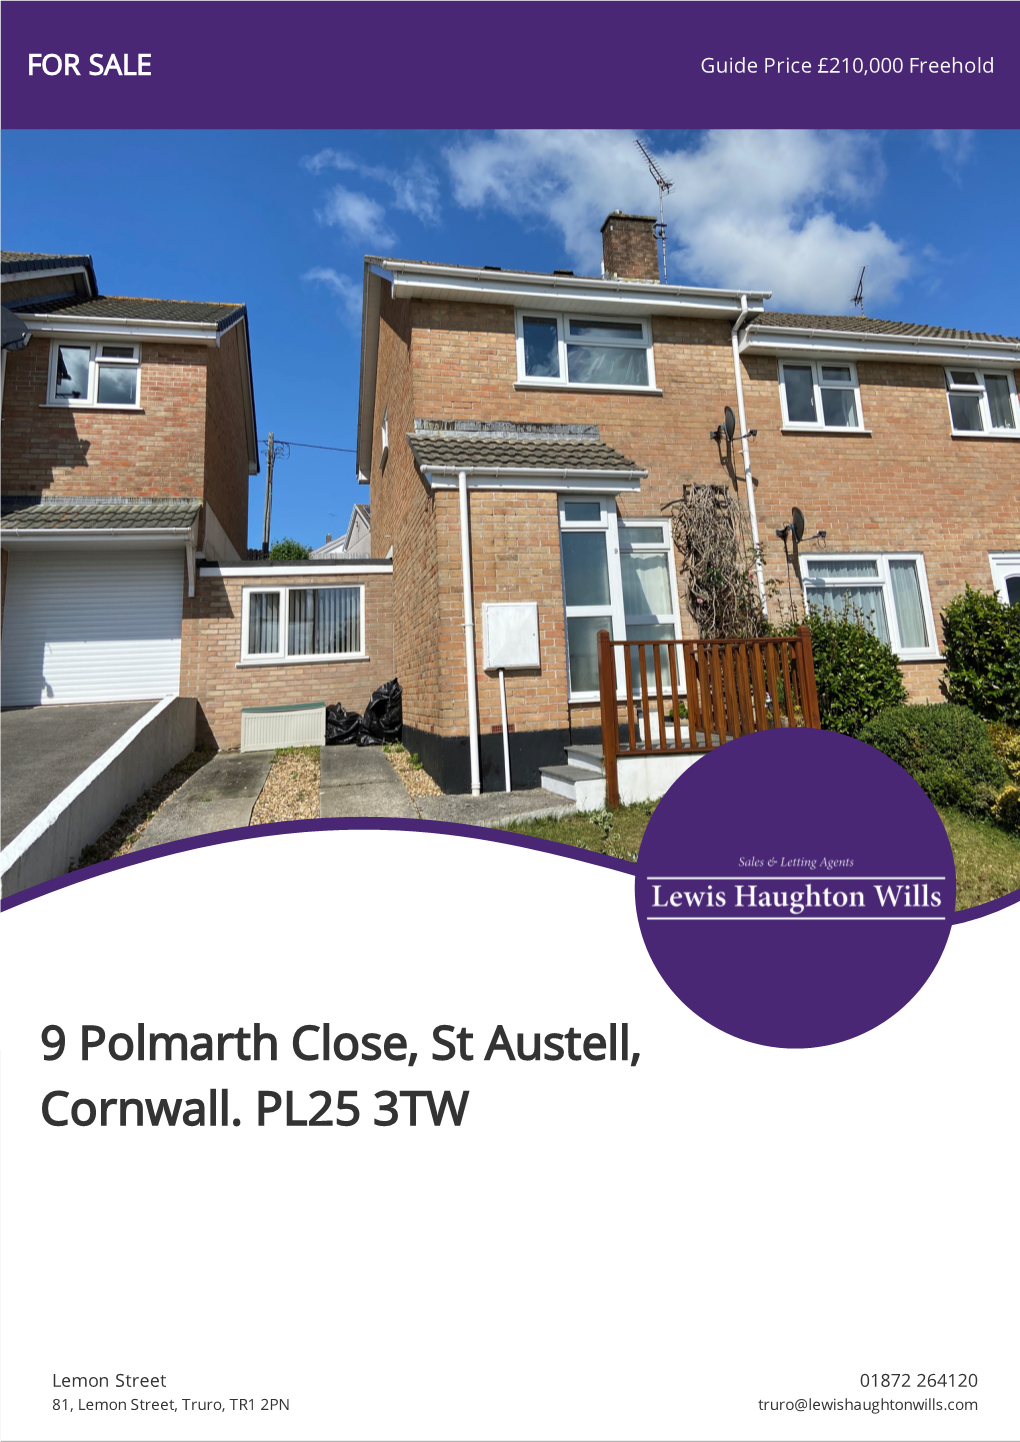 9 Polmarth Close, St Austell, Cornwall. PL25 3TW